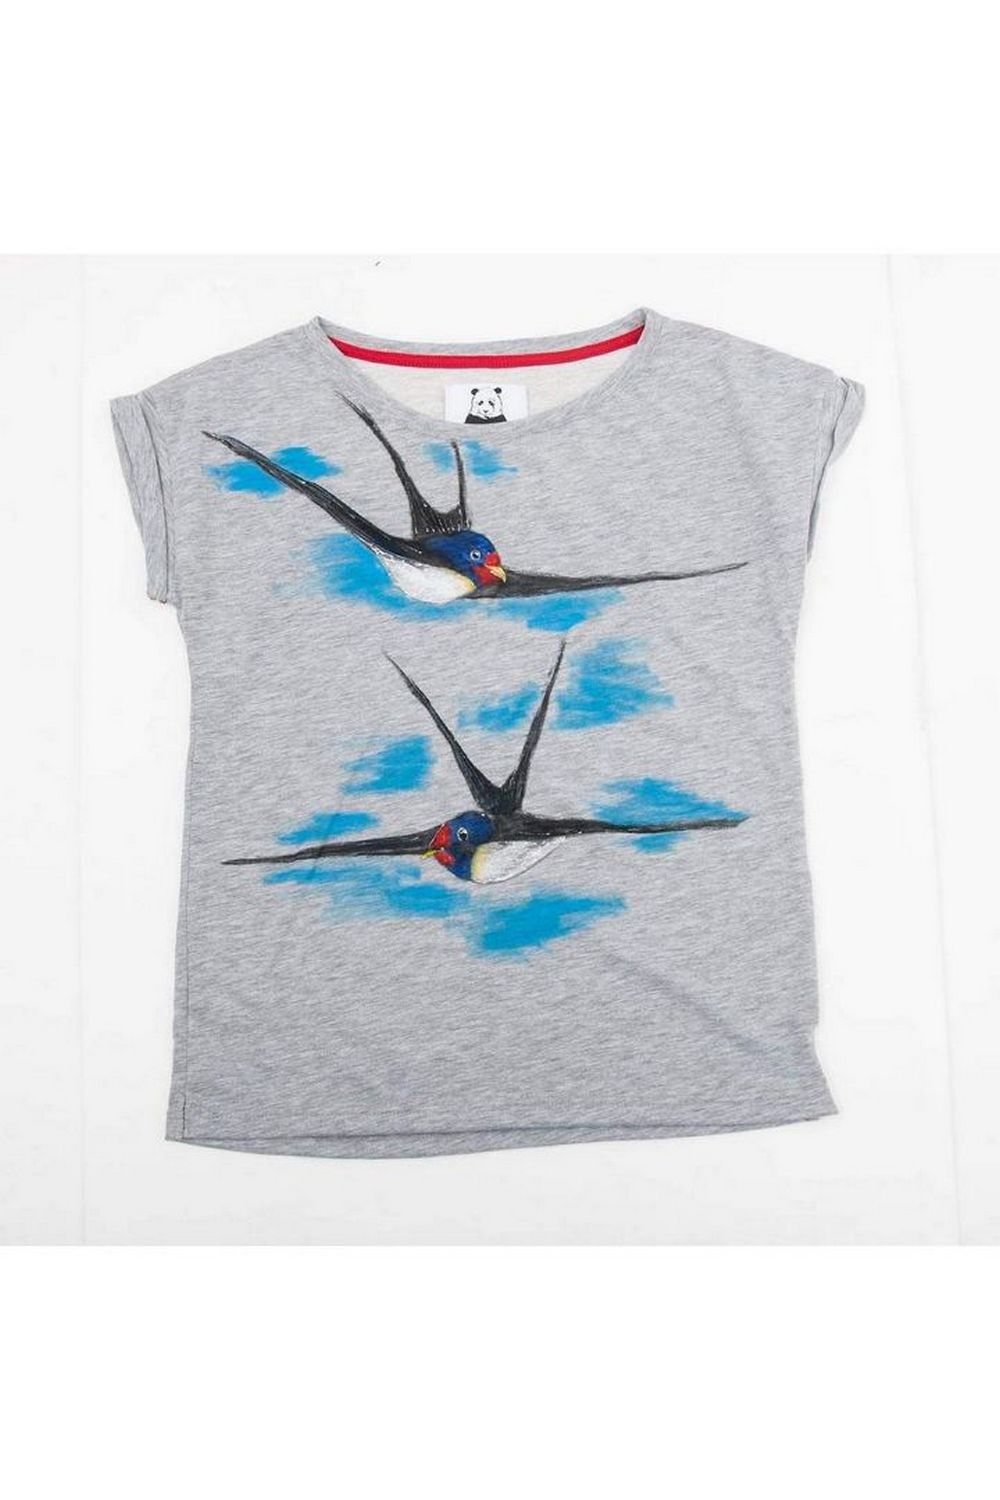 Buy Cropped Women Grey Cotton Print tee shirt , Sleeveless Birds tshirt, Unique stylish t shirt